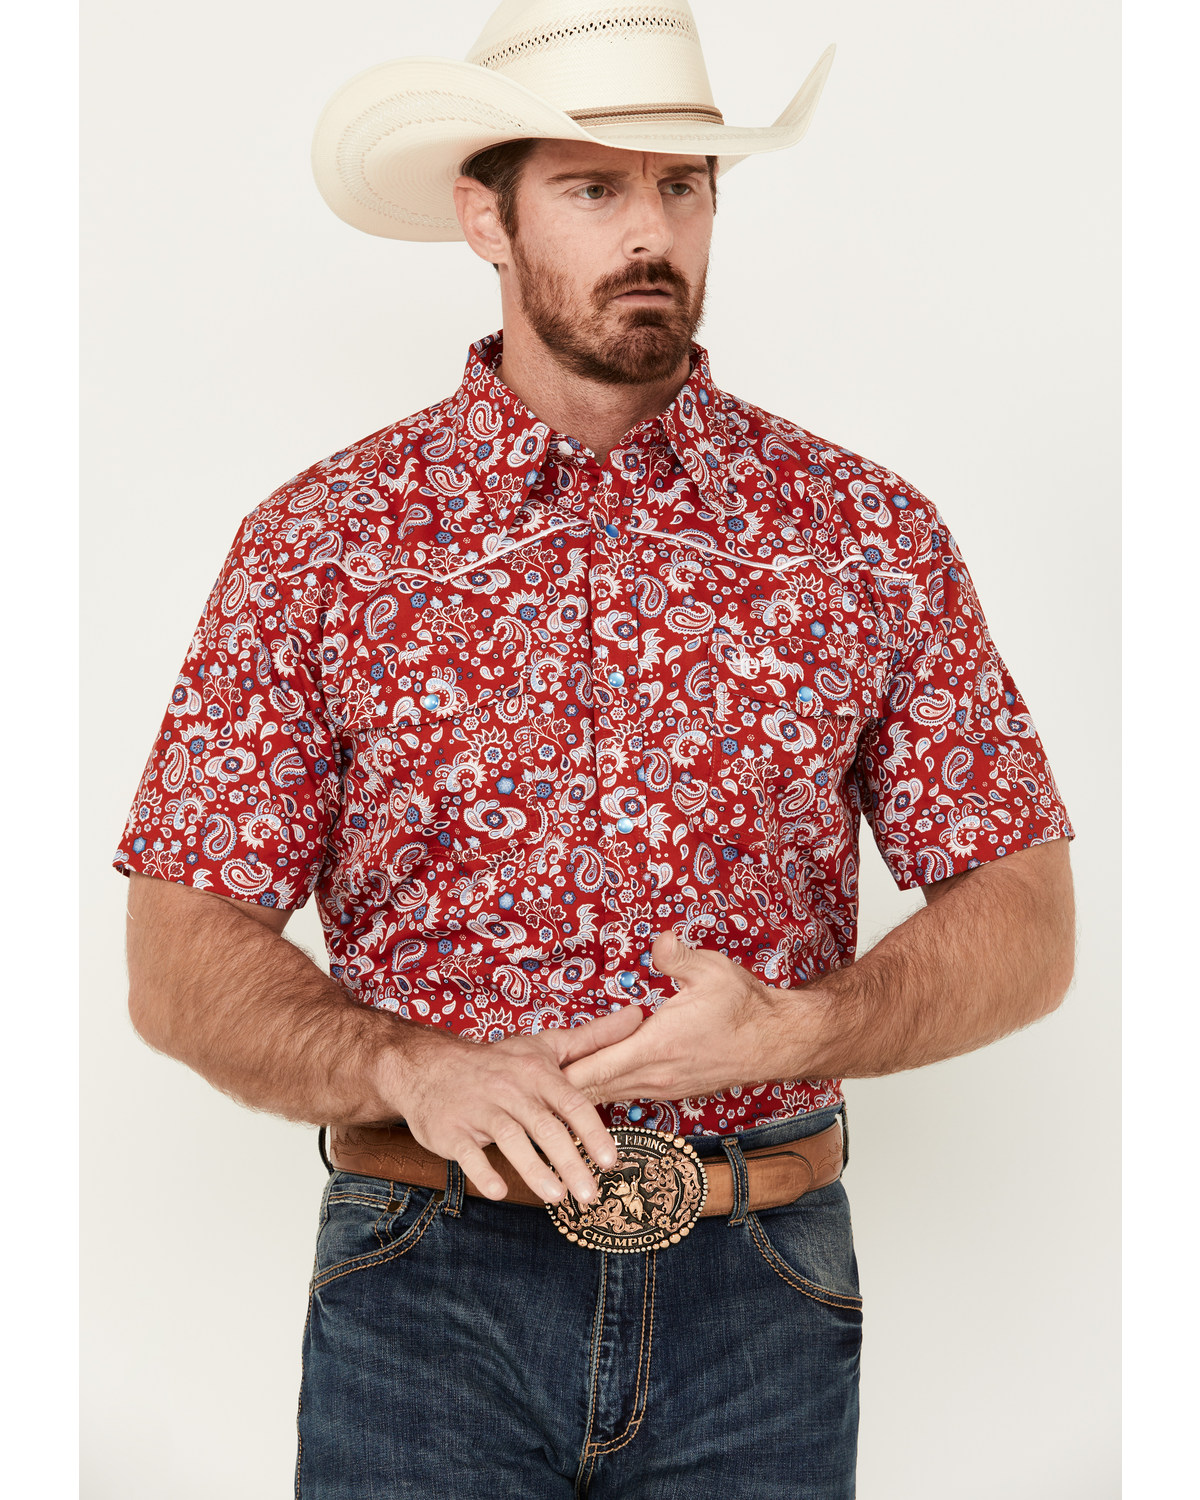 Cowboy Hardware Men's Boot Barn Exclusive Paisley Print Short Sleeve Pearl Snap Western Shirt